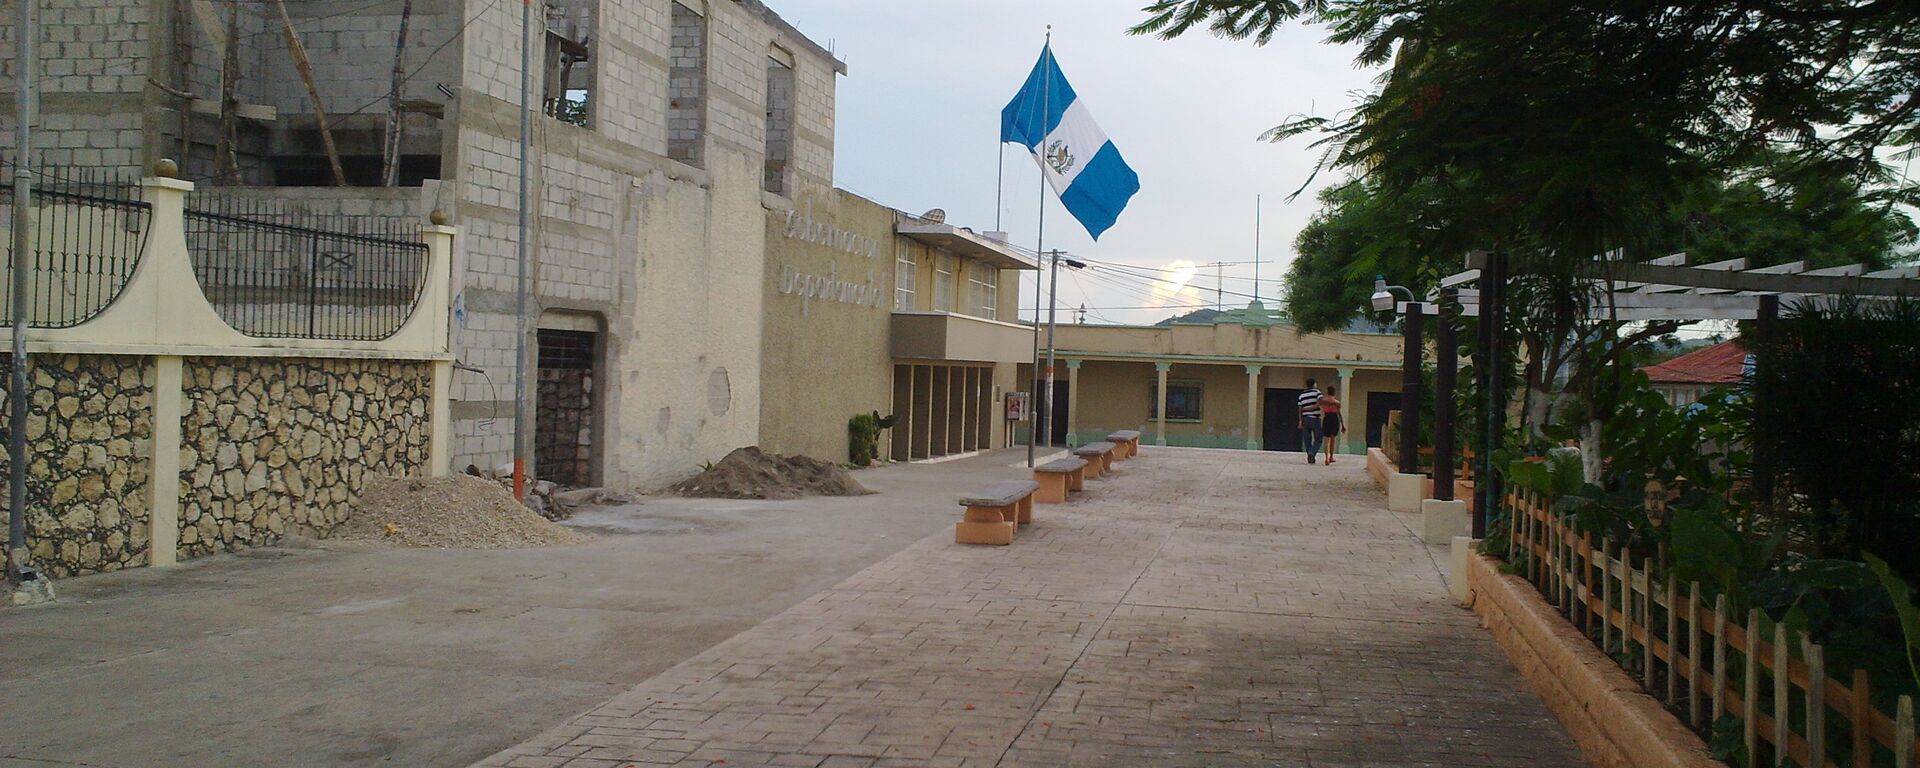 Una calle con la bandera de Guatemala - Sputnik Mundo, 1920, 30.07.2021